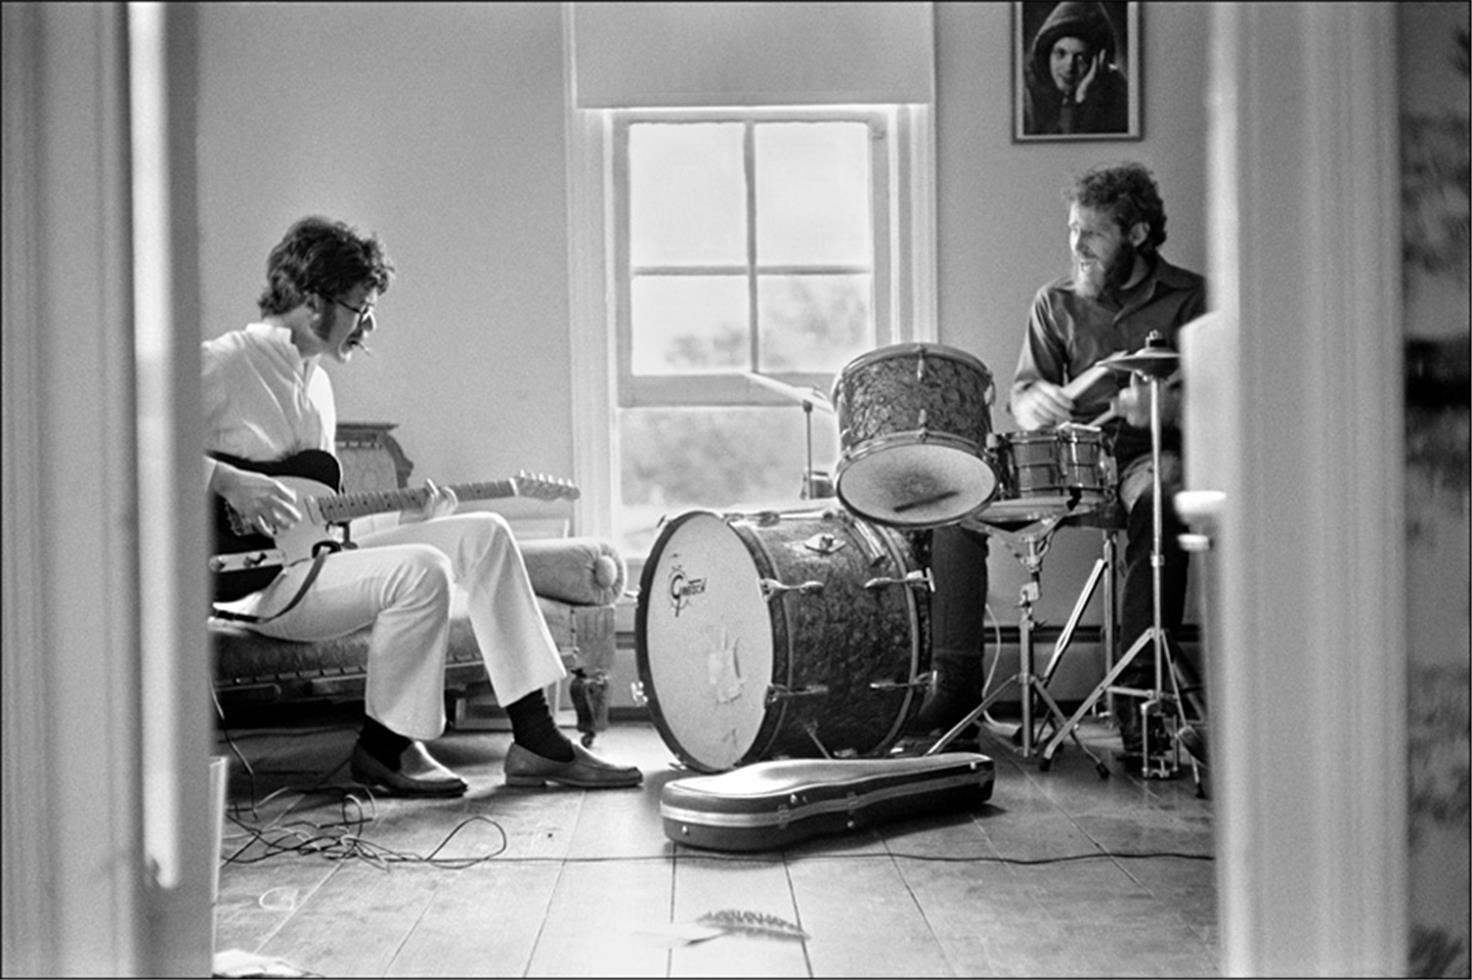 Elliott Landy Black and White Photograph - The Band, Robbie Robertson & Levon Helm rehearsing in Rick Danko’s Zena Rd. home